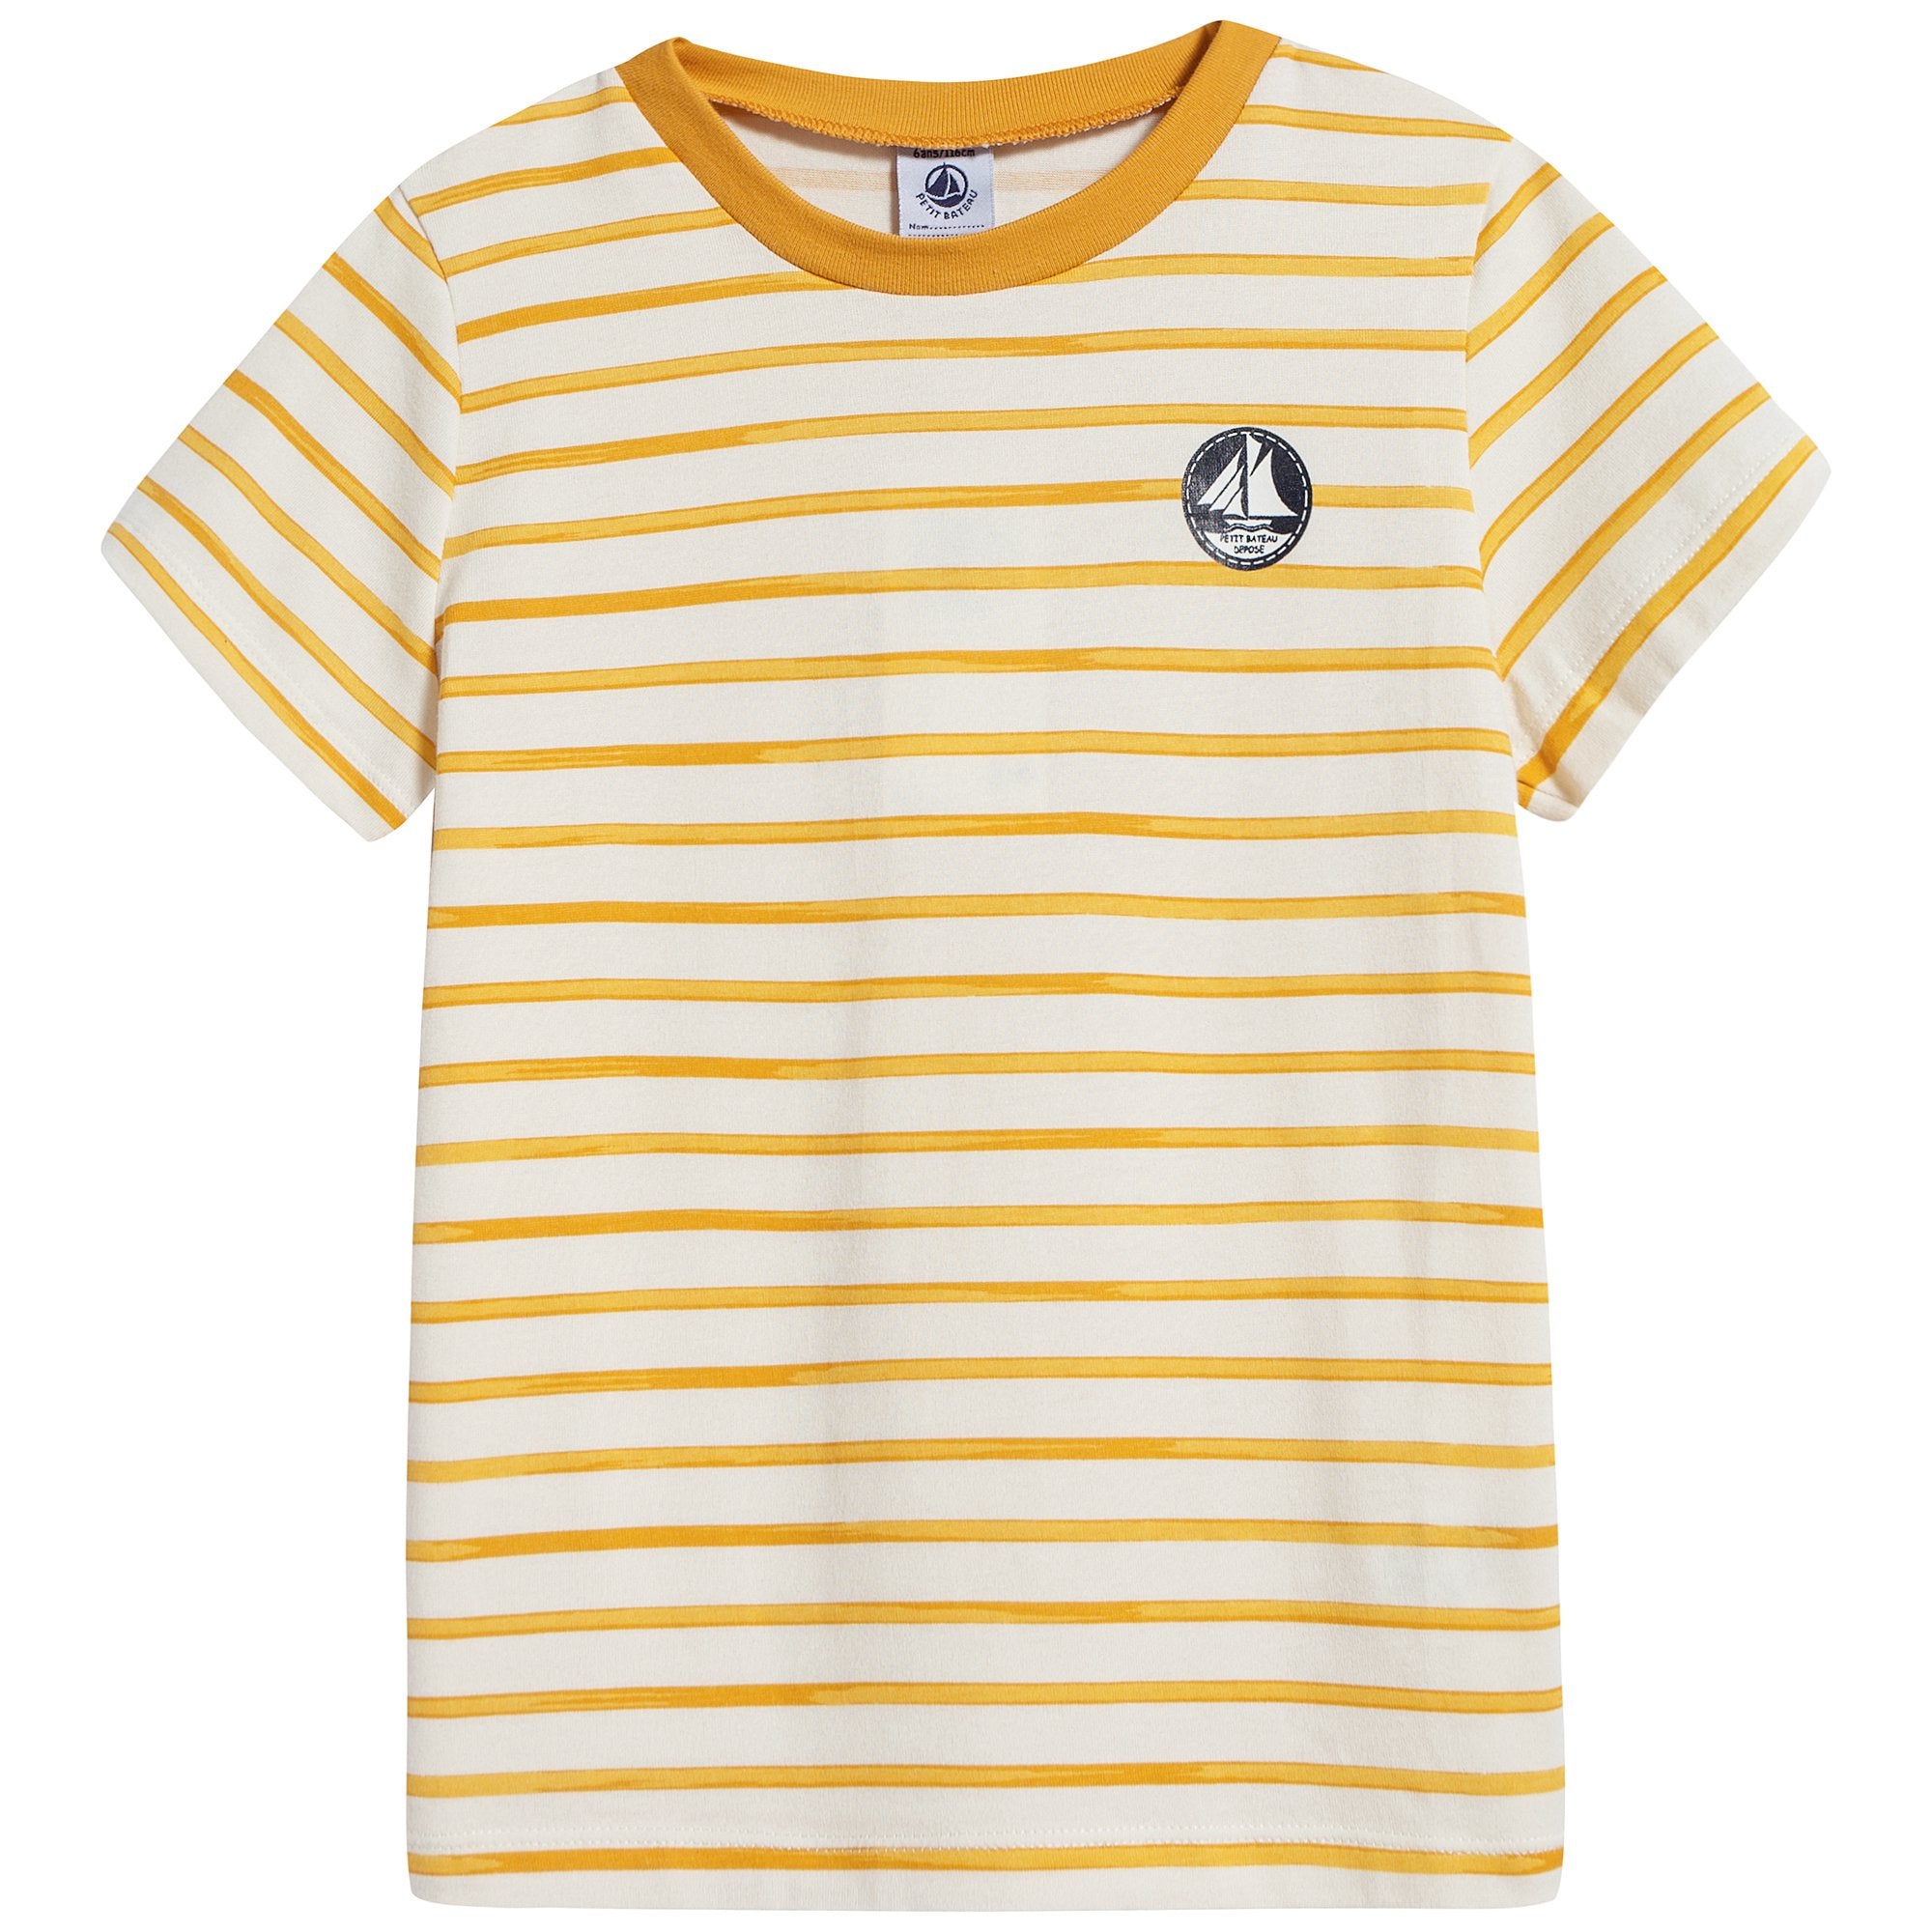 Girls Yellow Cotton T-shirt